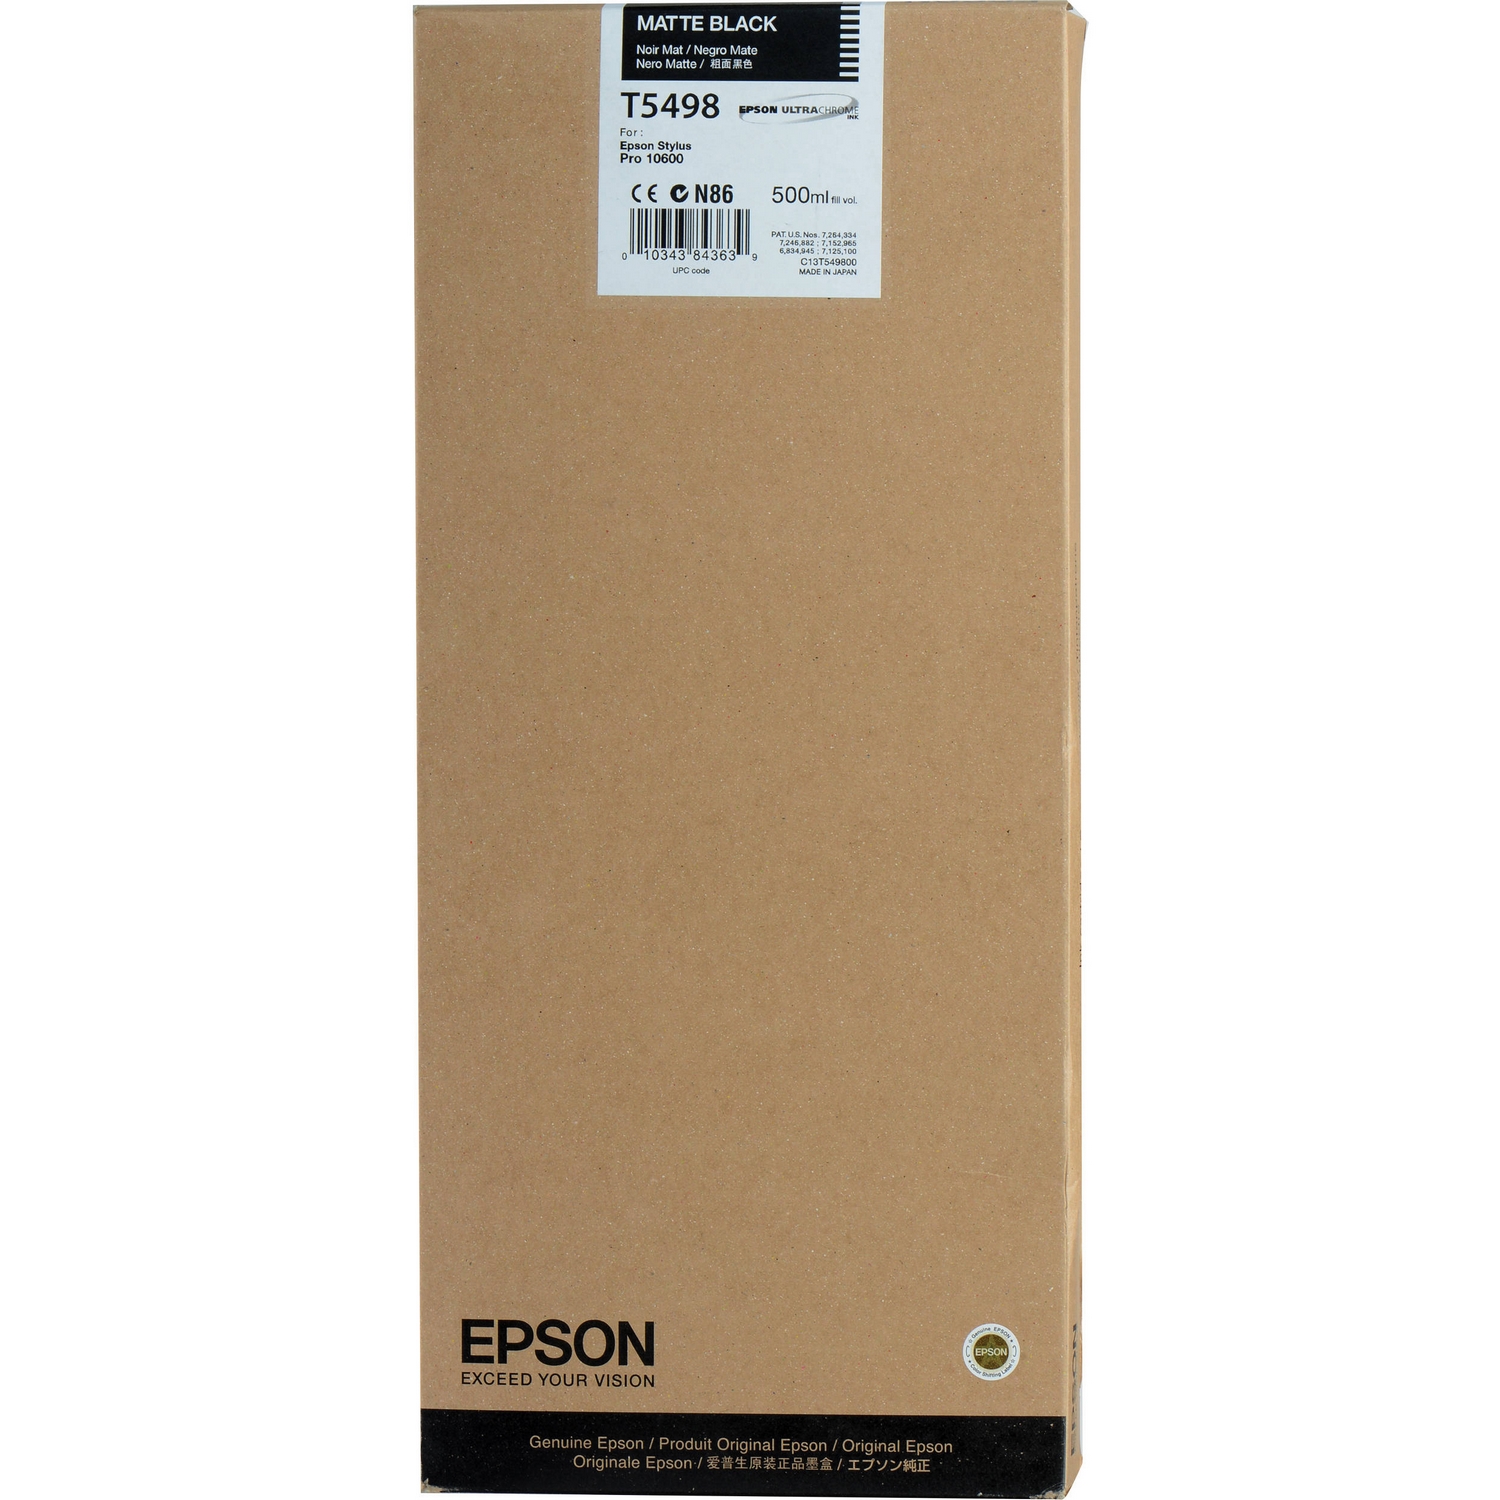 Original Epson T5498 Matte Black Ink Cartridge (C13T549800)